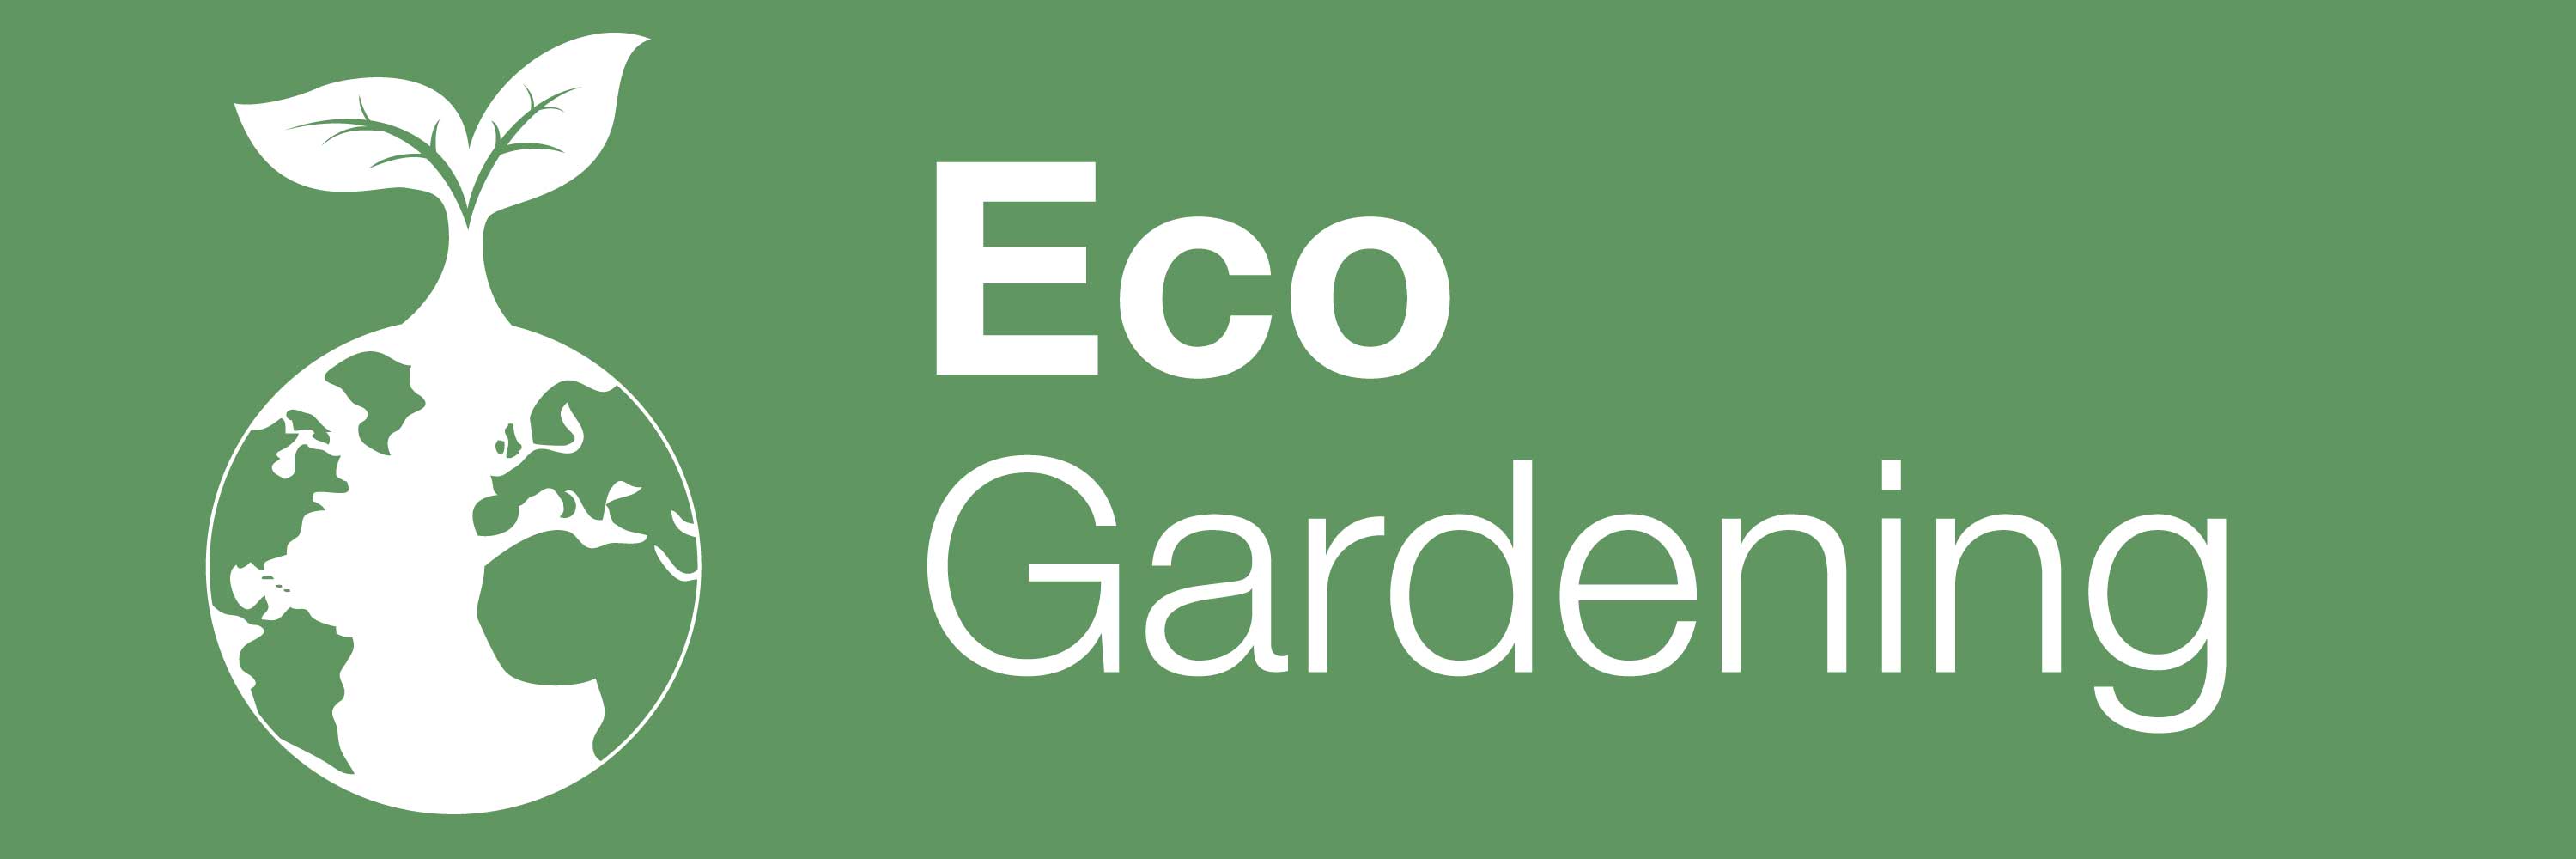 Eco Gardening Banner